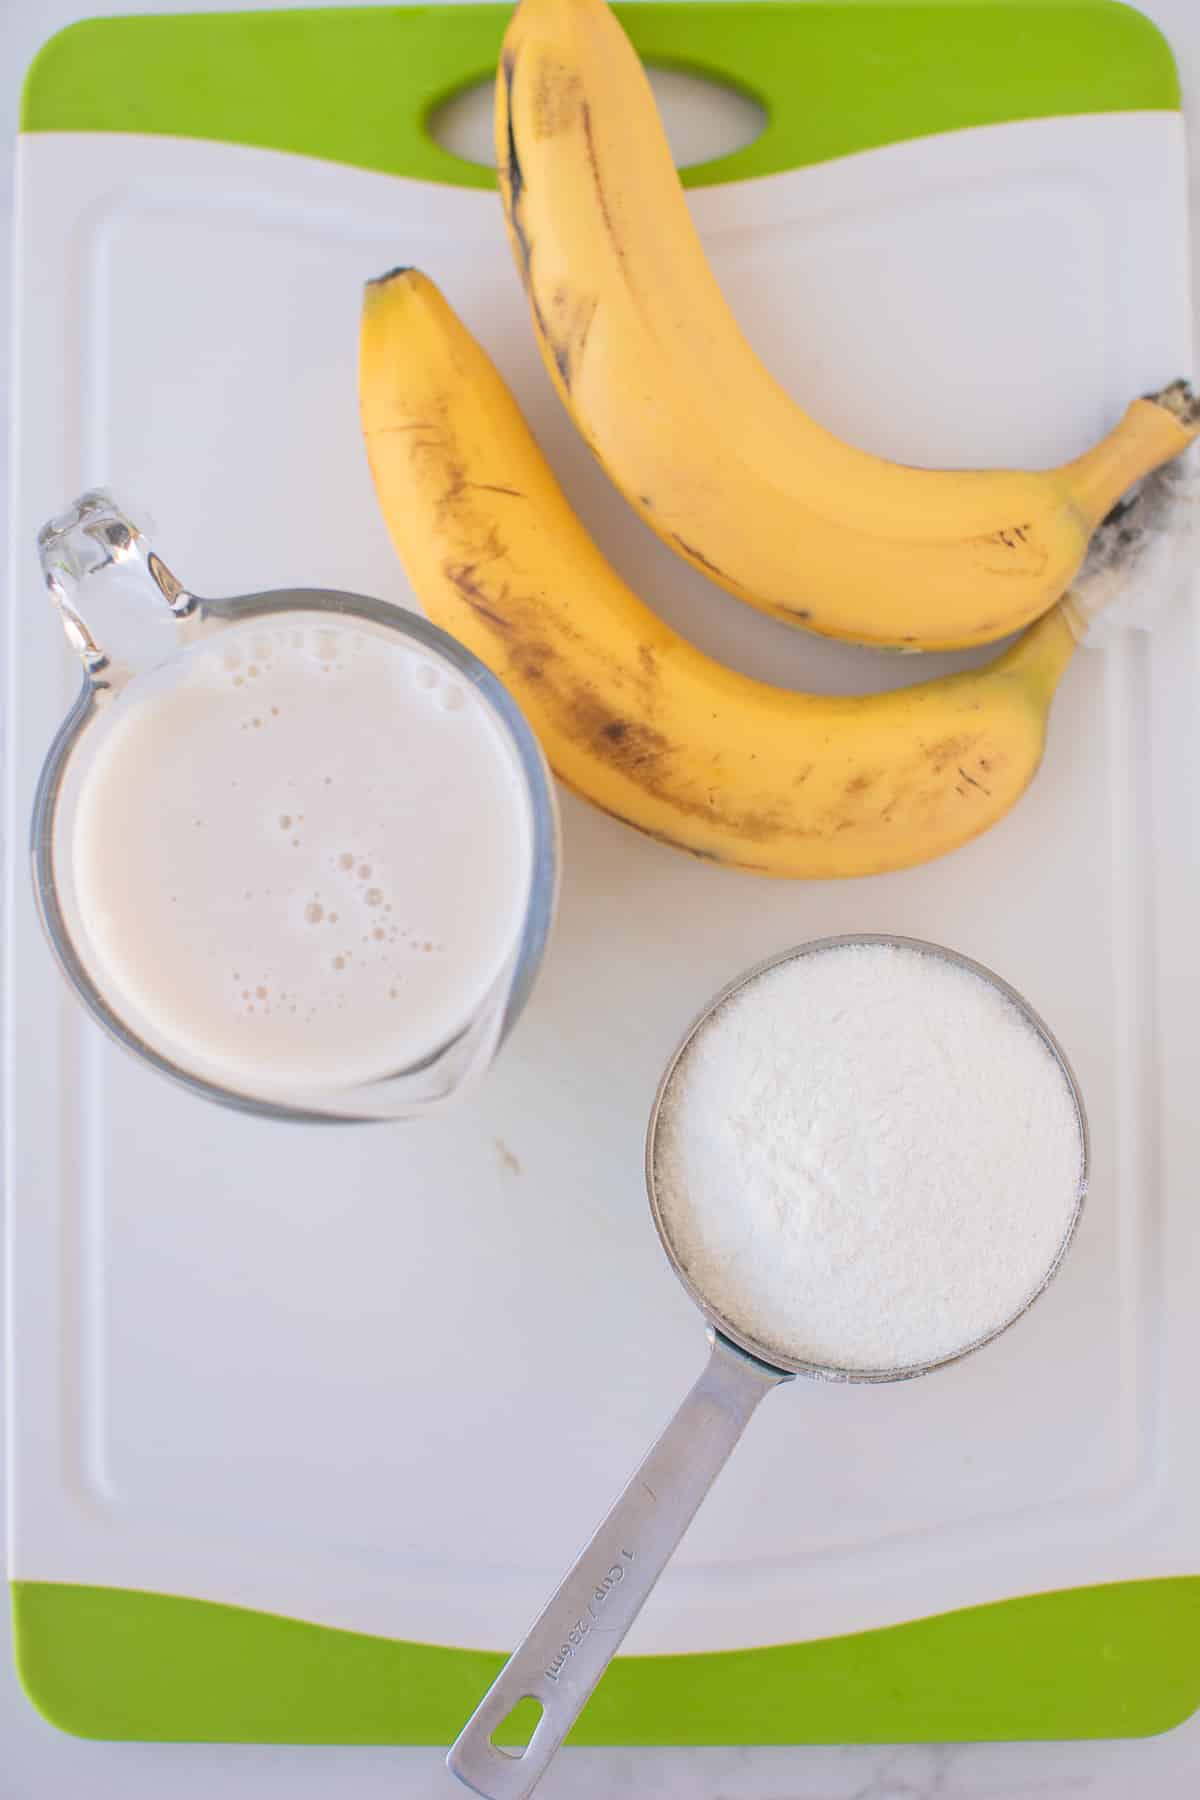 Two ripe bananas, almond milk, and rice flour to make pancakes